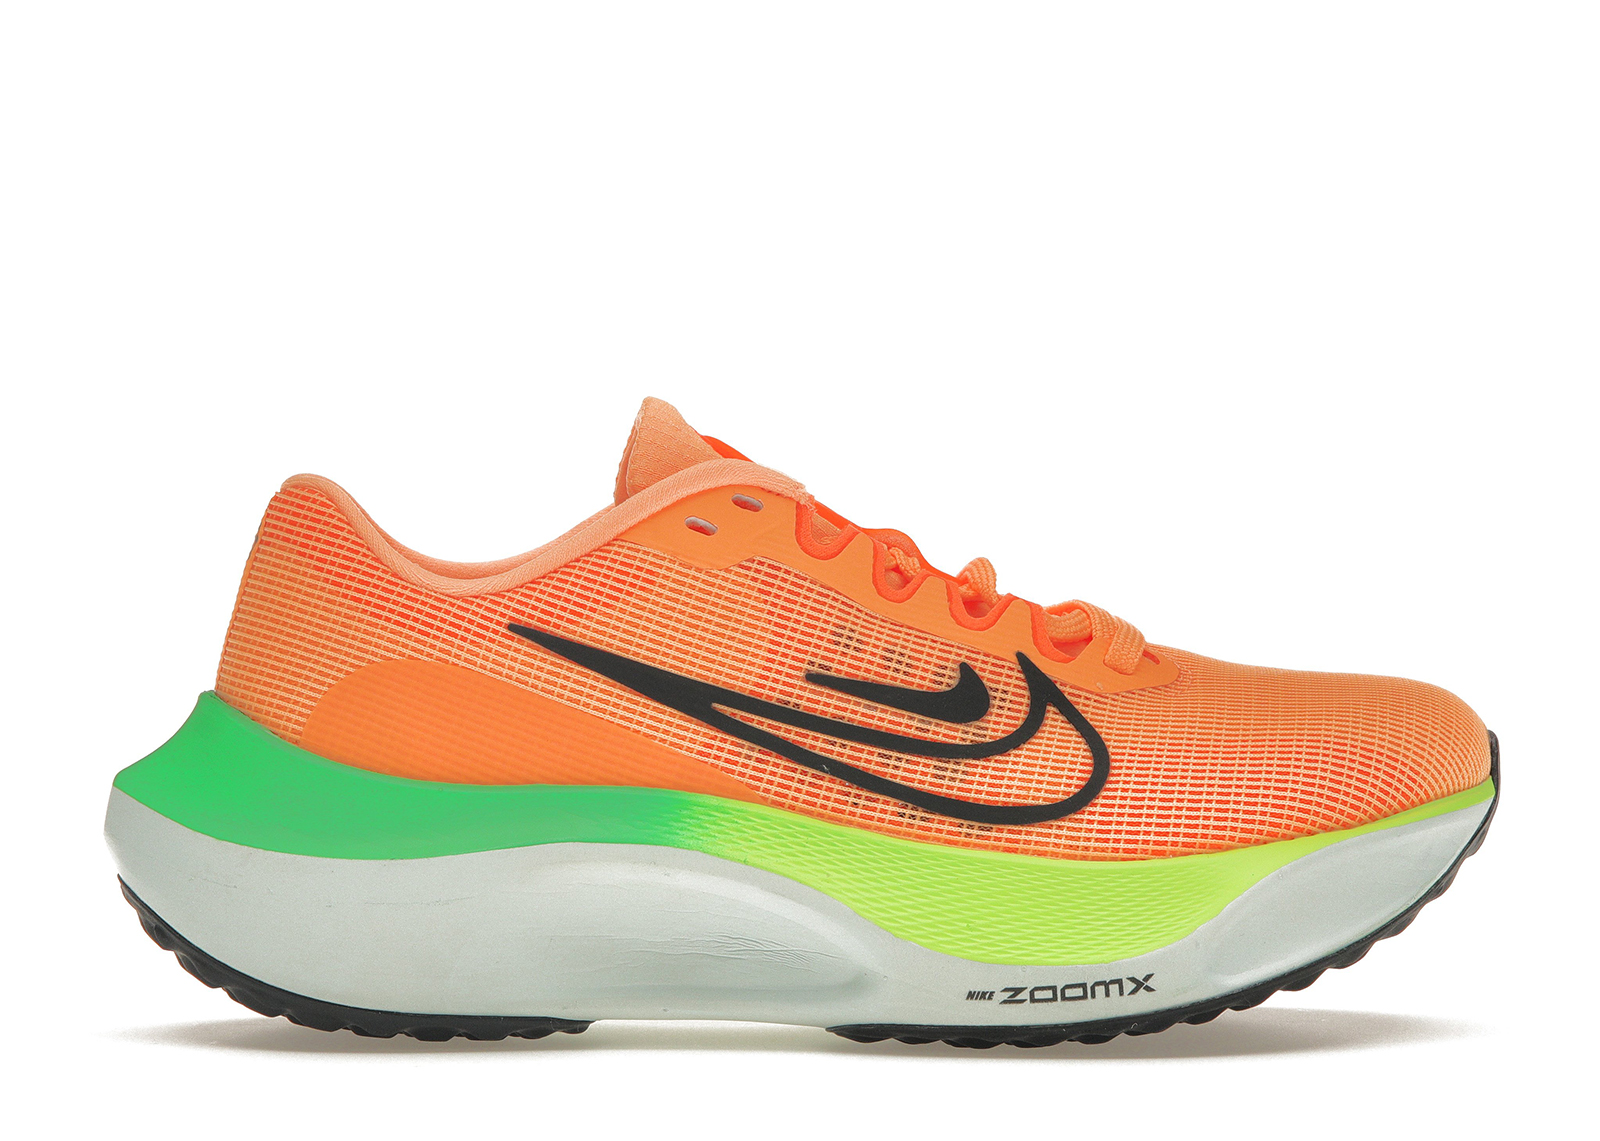 Nike Zoom Fly 5 Total Orange Ghost Green (Women's) - DM8974-800 - US